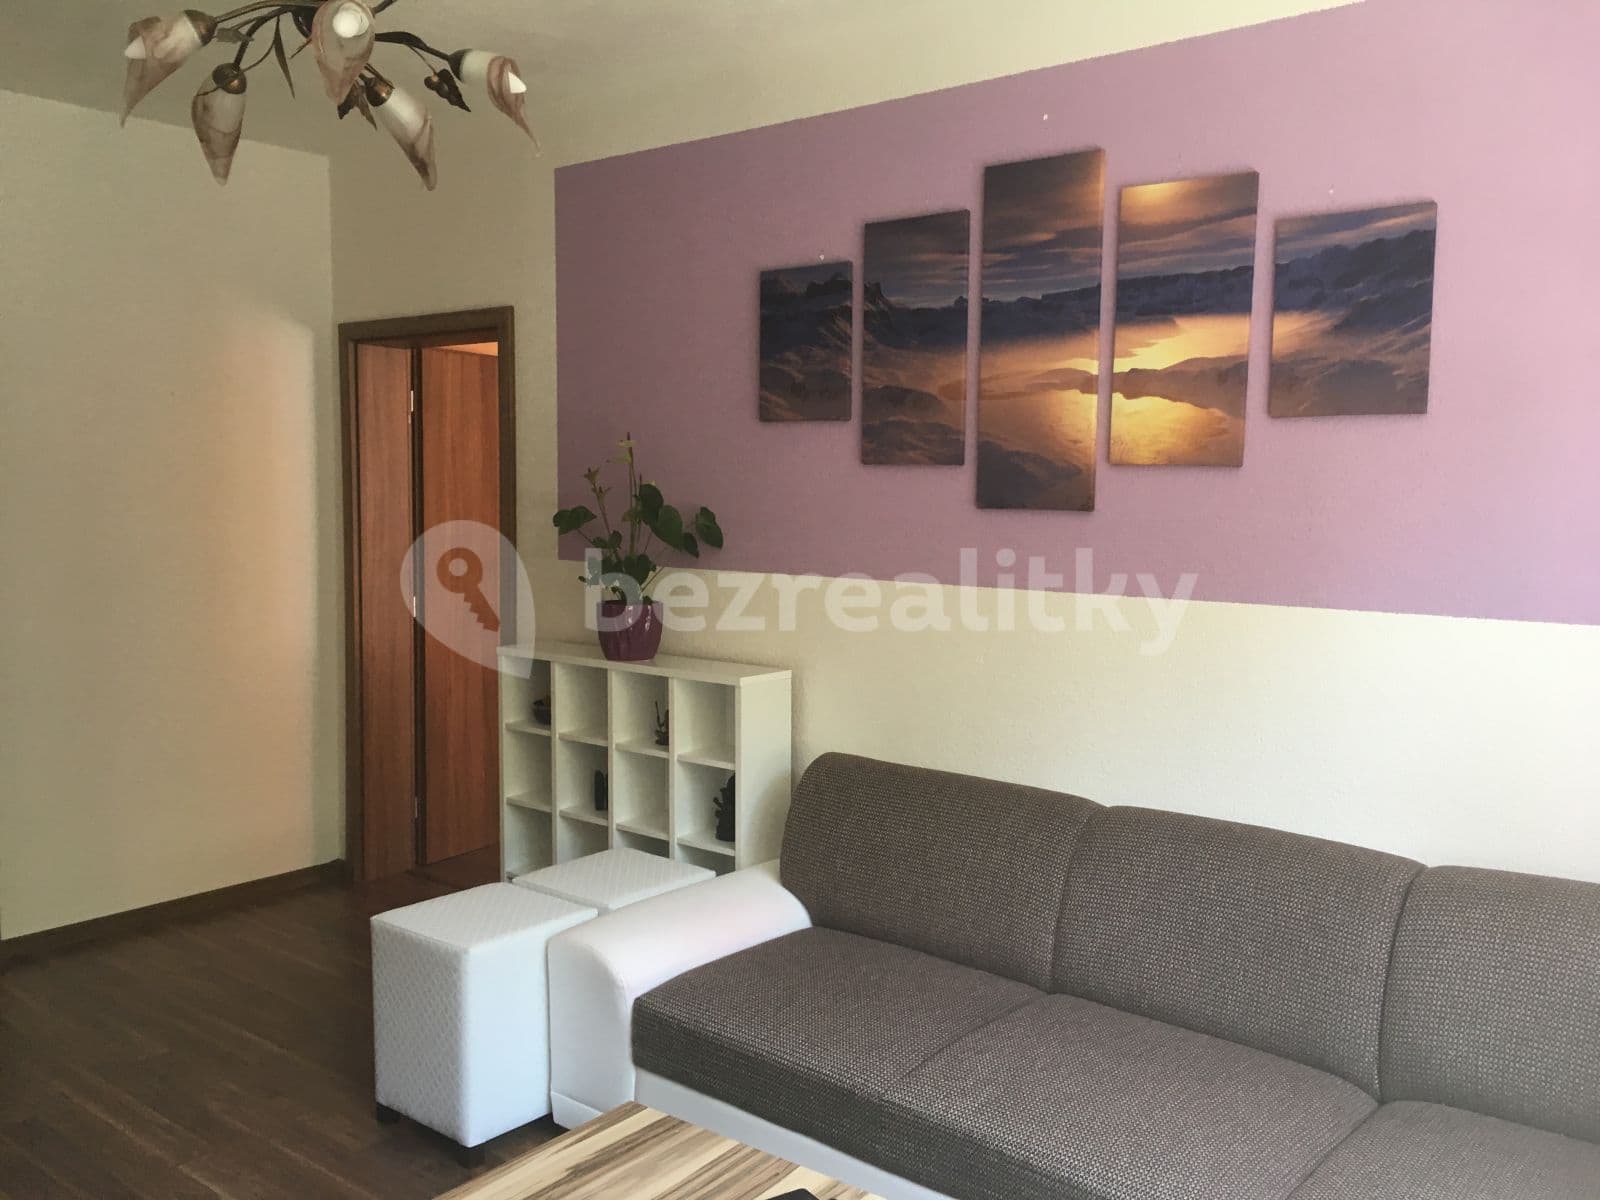 2 bedroom flat to rent, 58 m², Sládkova, Karlovy Vary, Karlovarský Region